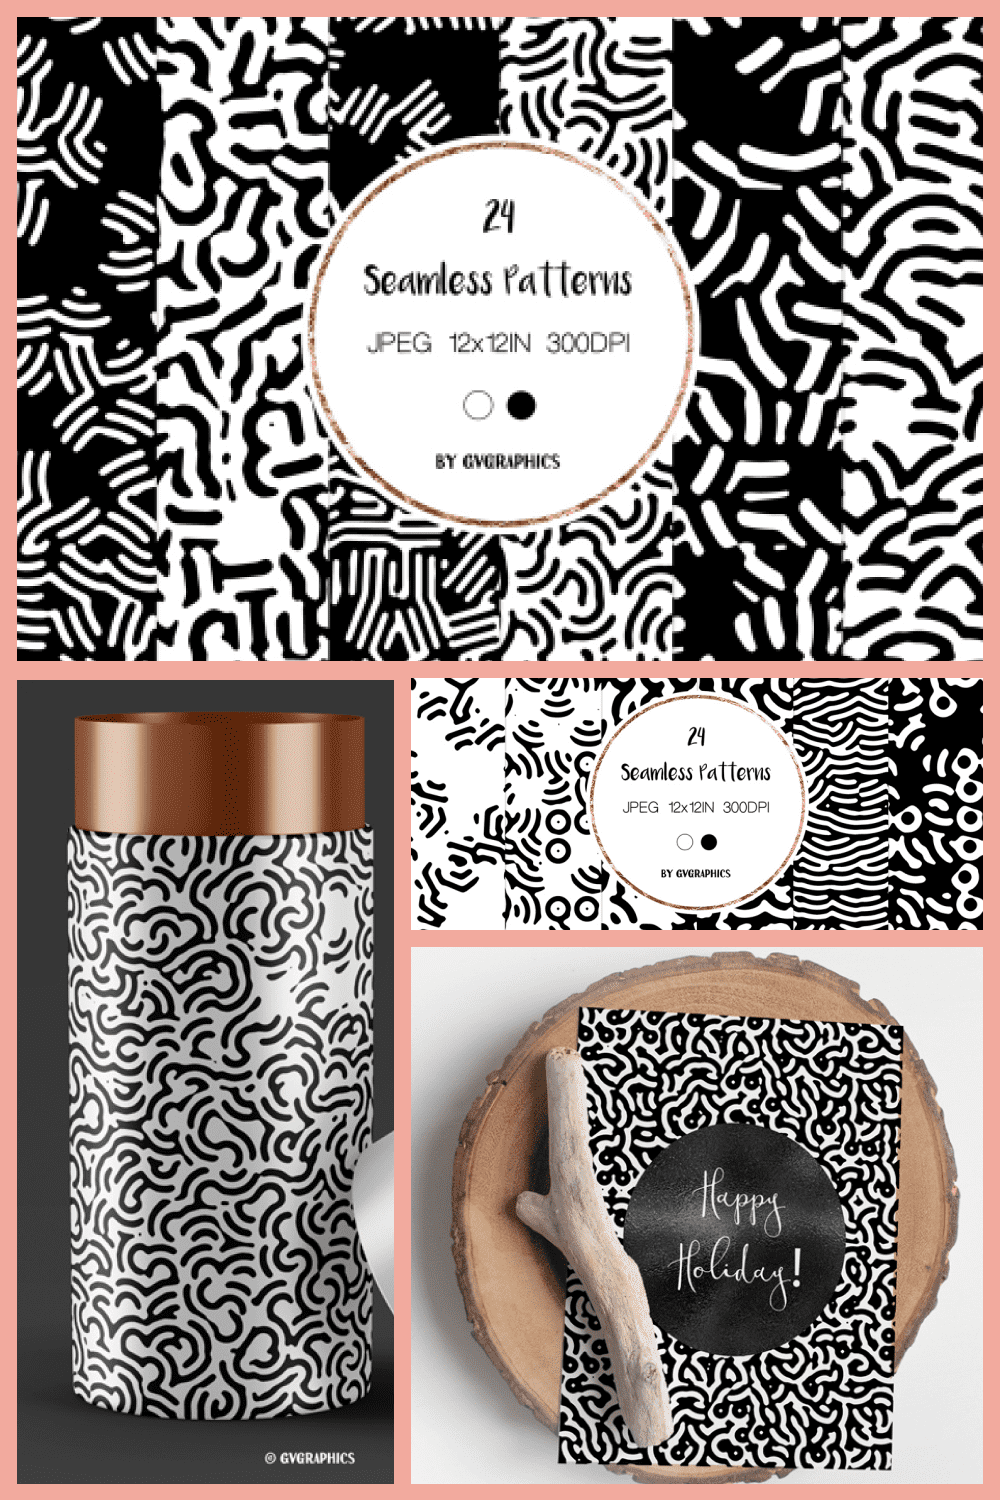 Black and White Abstract Seamless Patterns - MasterBundles - Pinterest Collage Image.